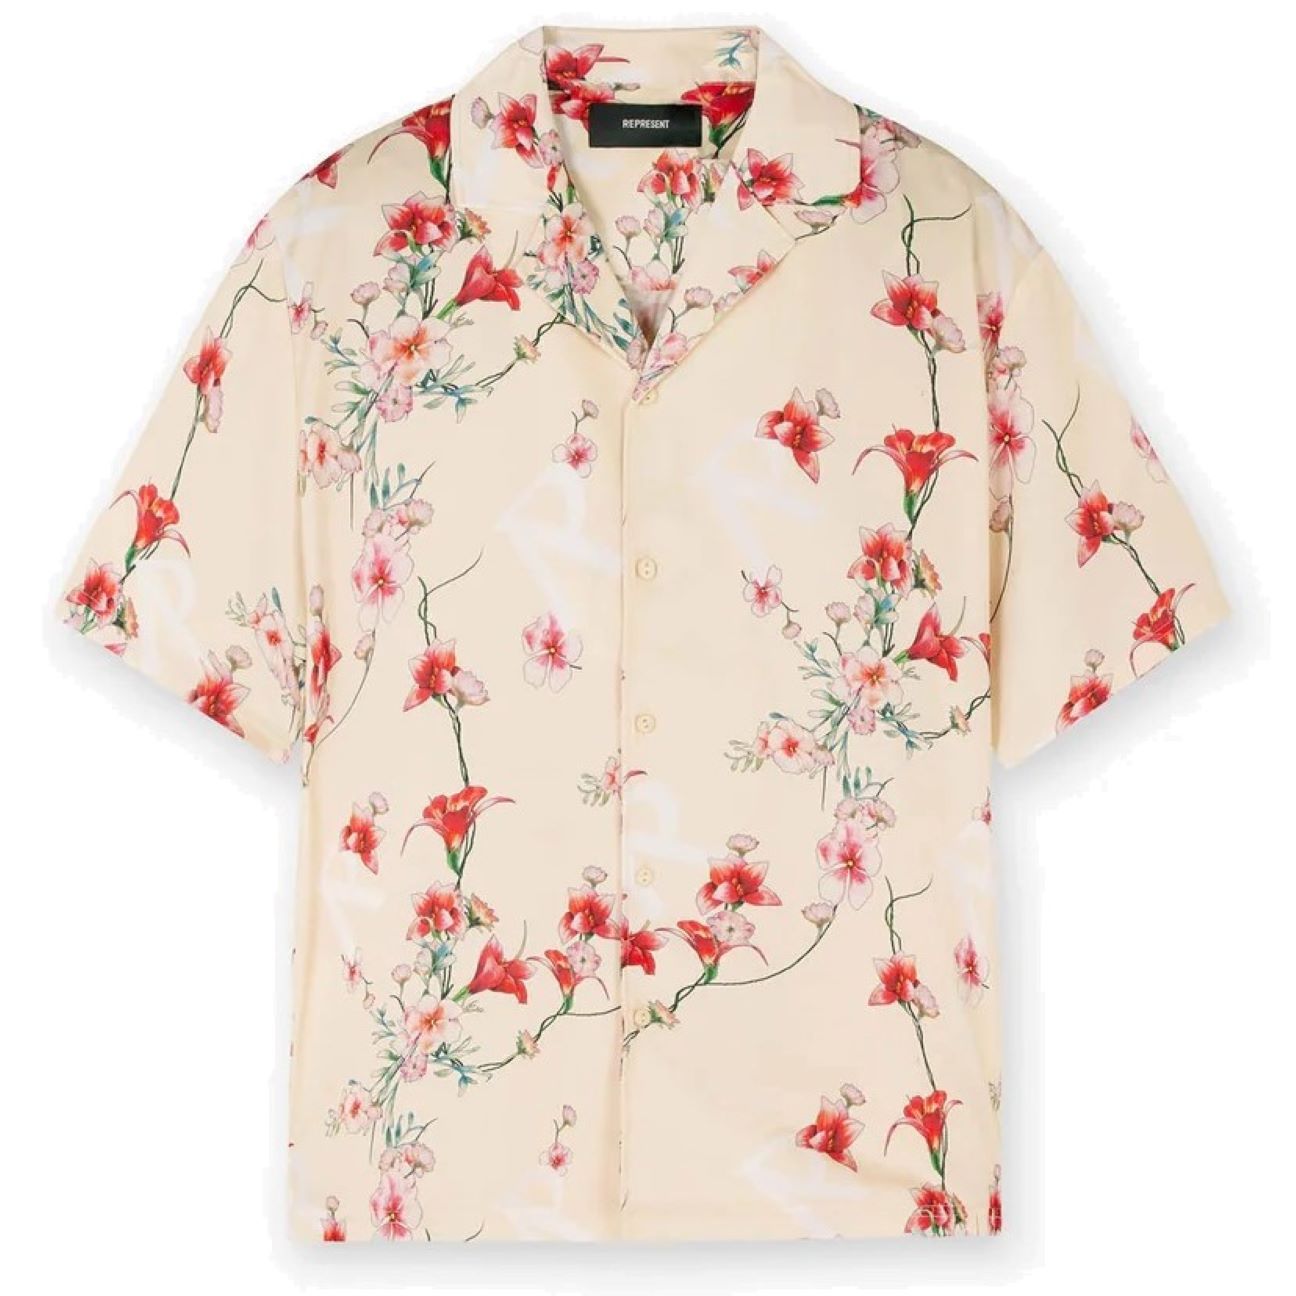 REPRESENT Floral Shirt in Cream XL